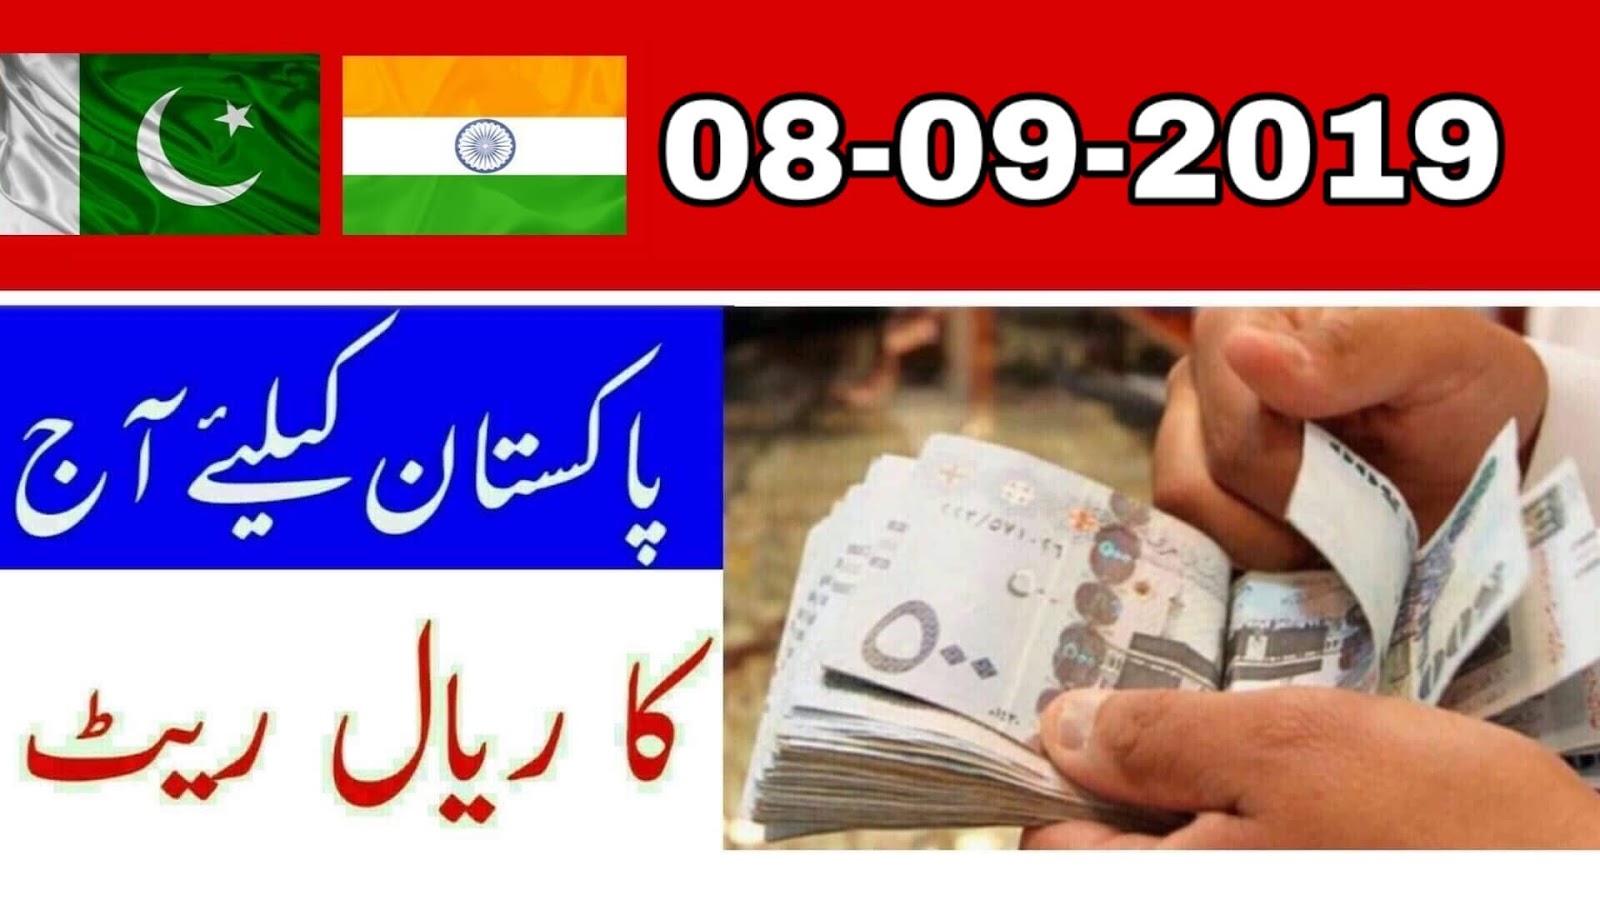 Exchange rate today saudi riyal to indian rupees